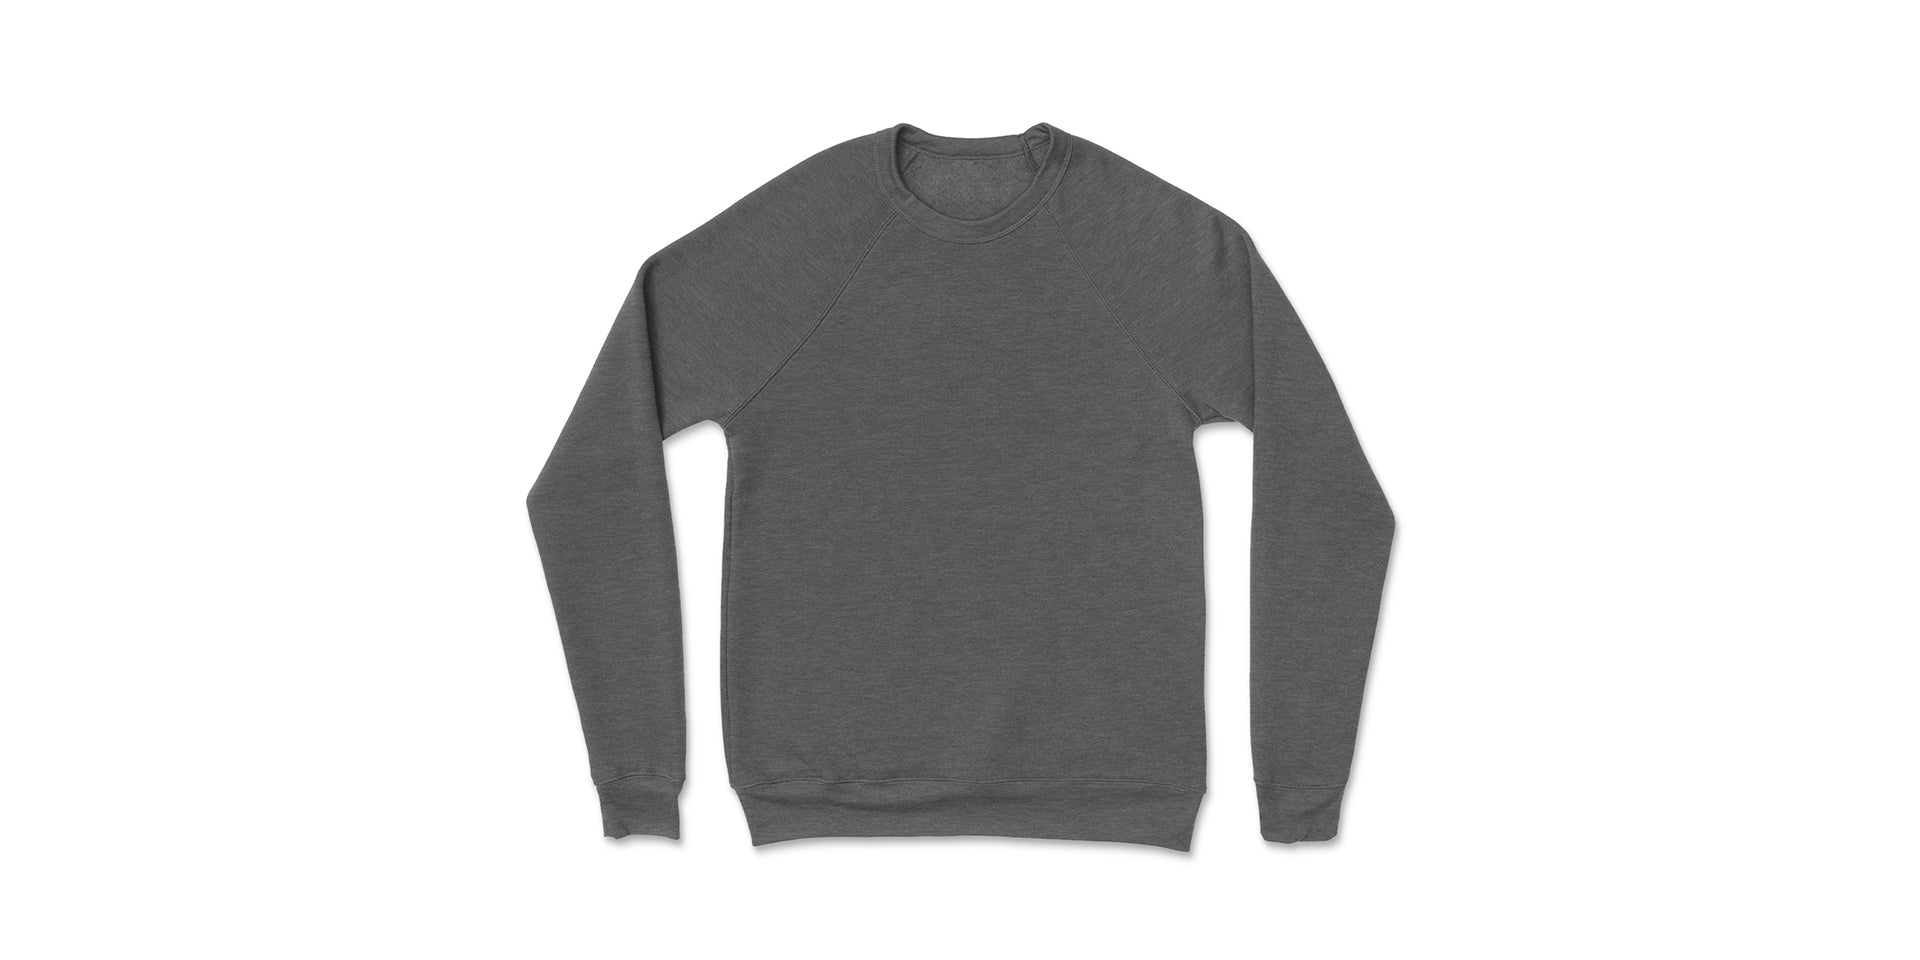 The T-Shirt Deli, Co. Blank Pullover Sweatshirt